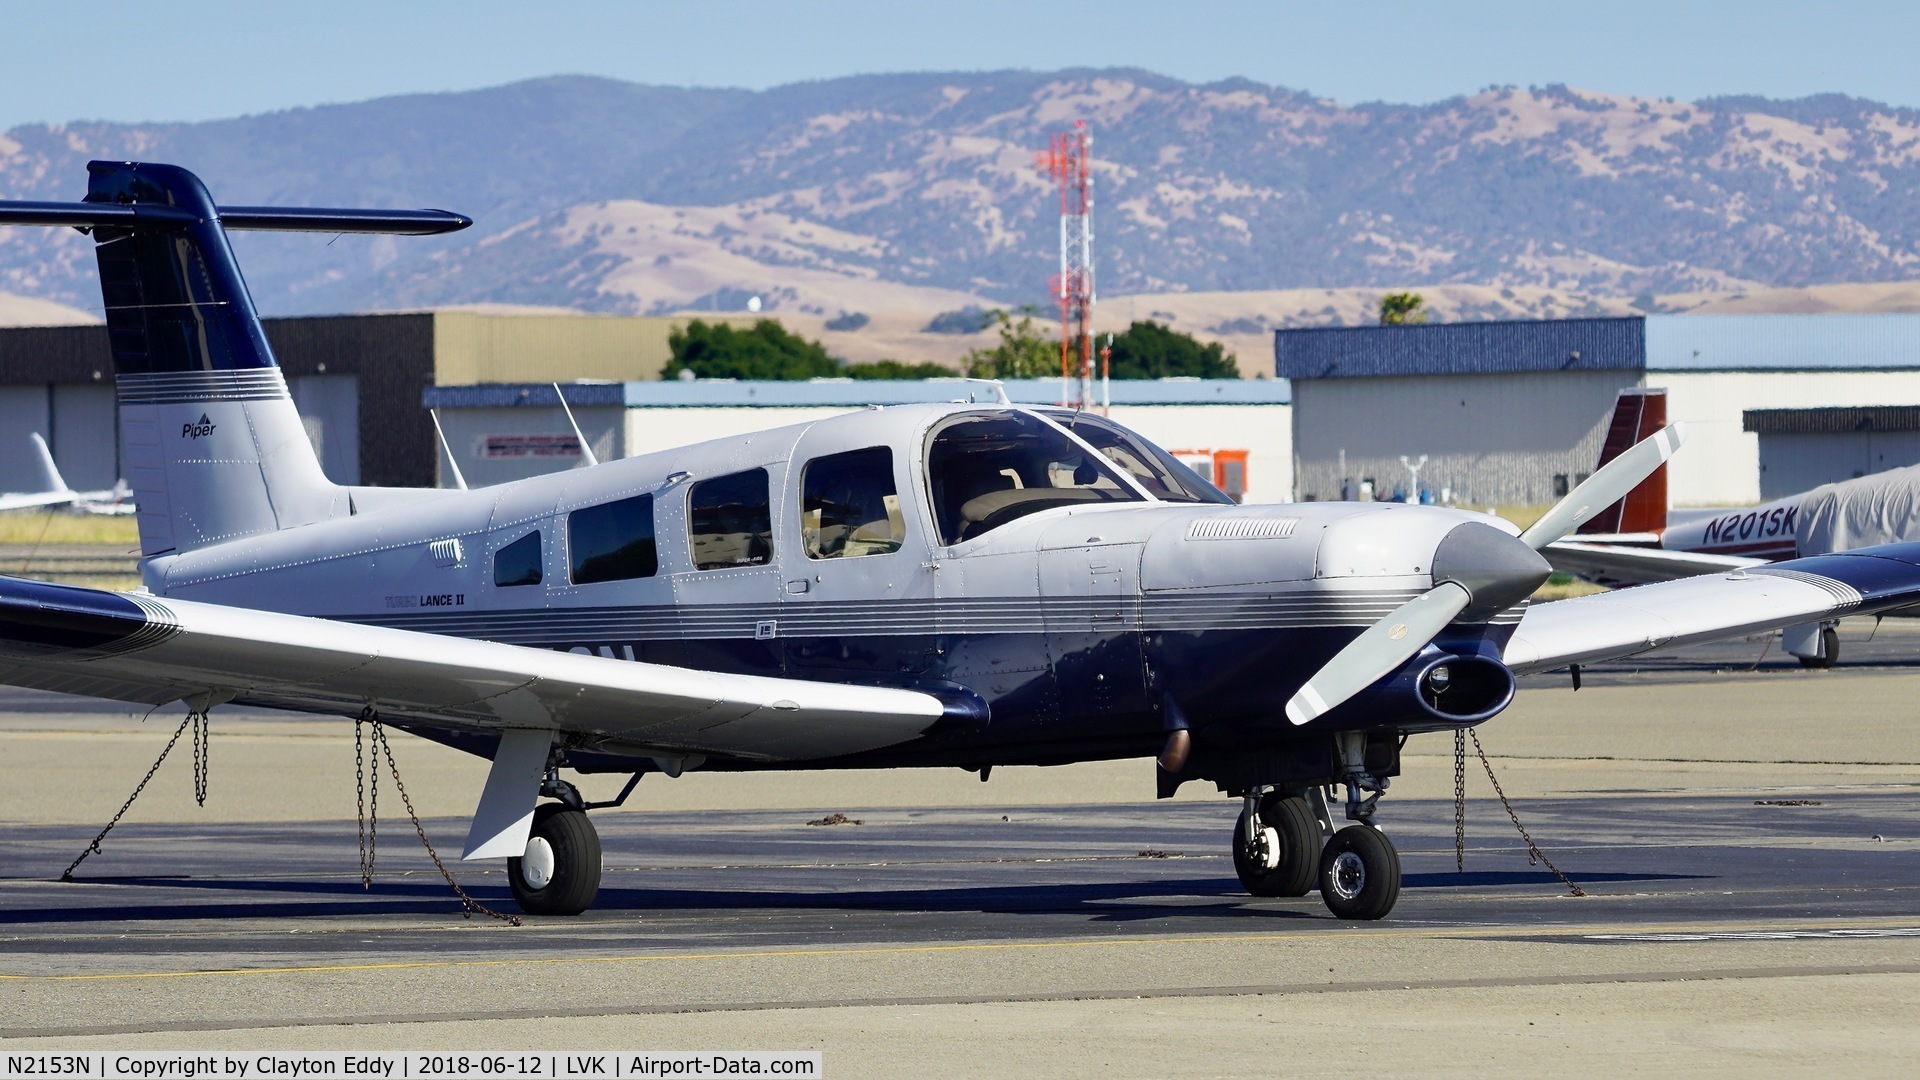 N2153N, 1979 Piper PA-32RT-300T Turbo Lance II C/N 32R-7987096, Livermore Airport California 2018.